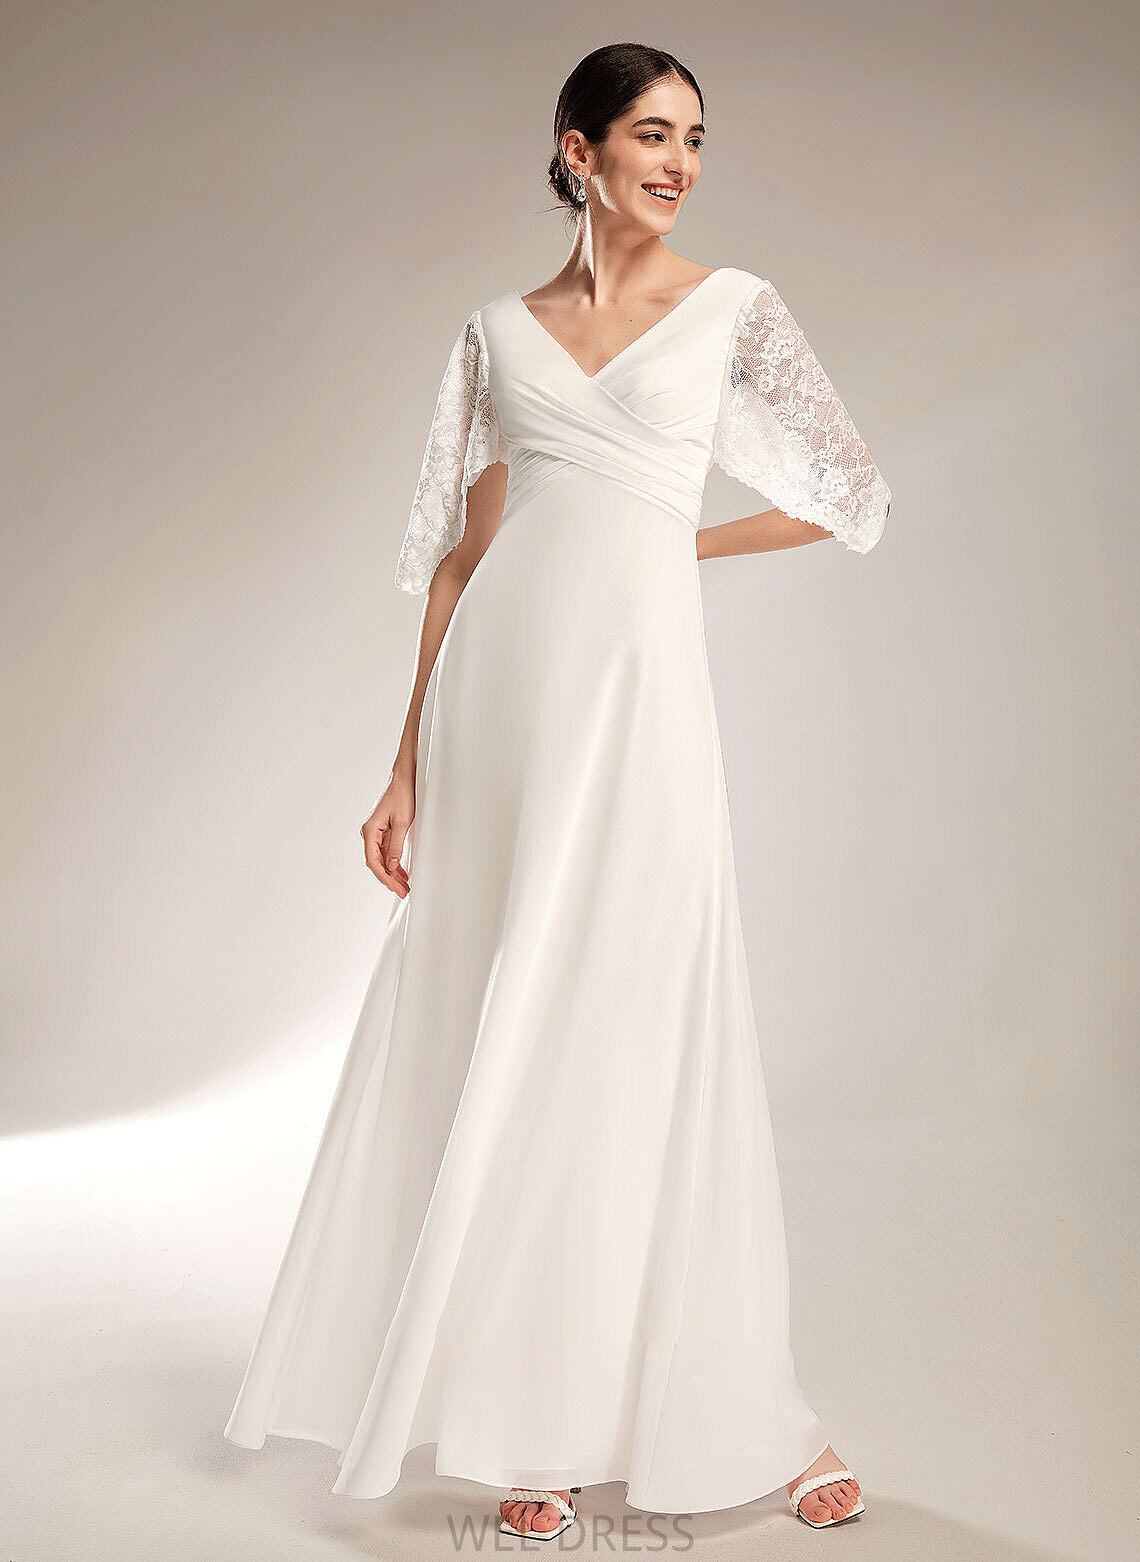 Lace Sheath/Column Dress Wedding Wedding Dresses Floor-Length Novia V-neck With